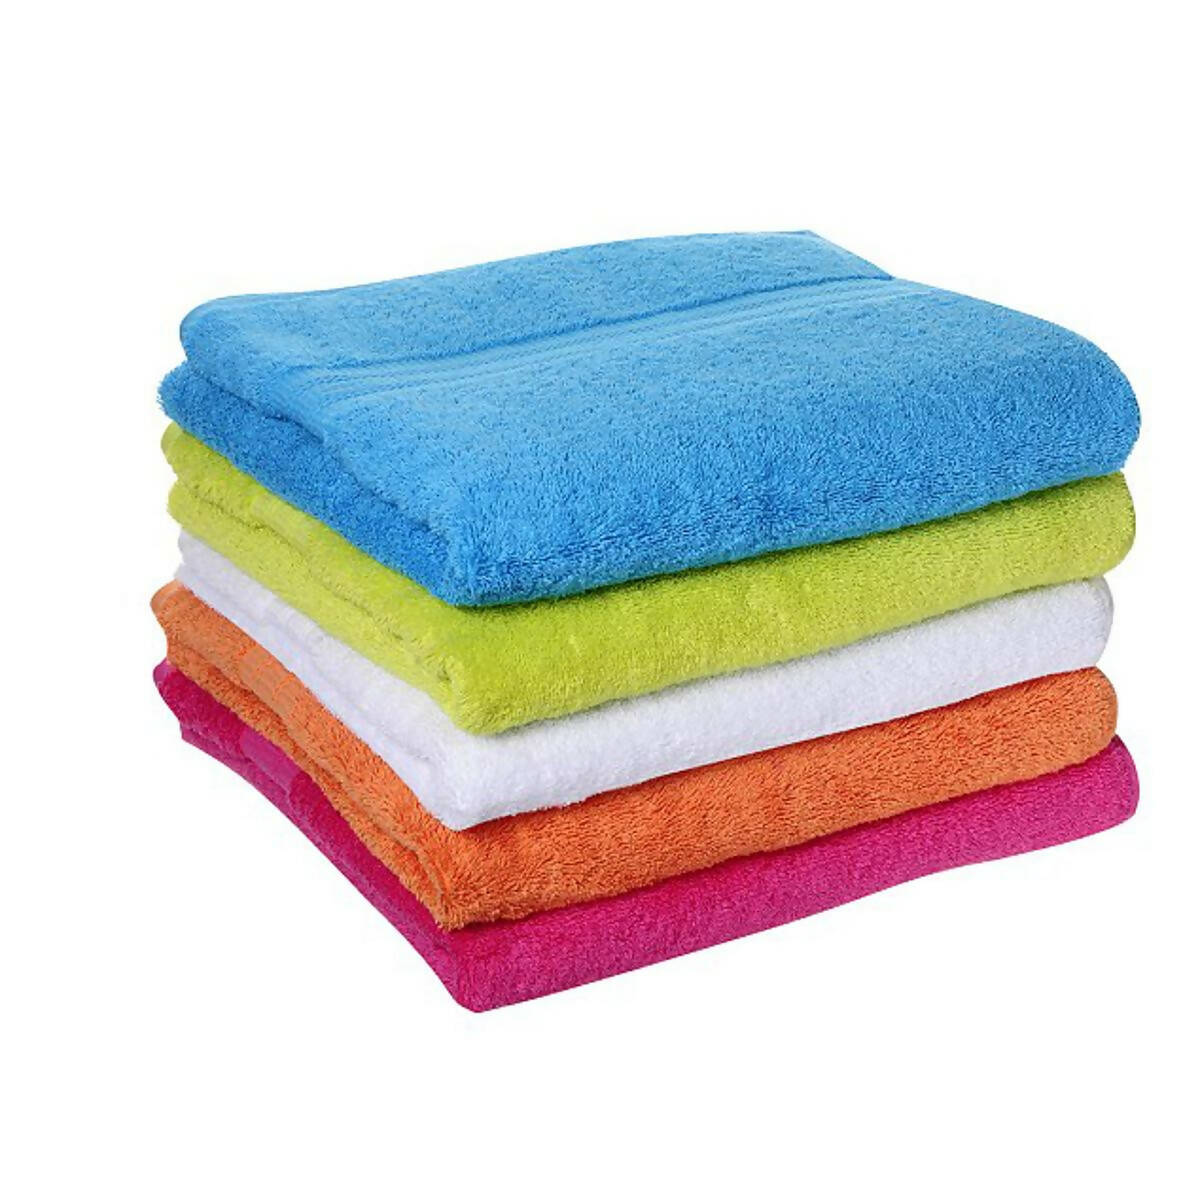 Bath Towel Luxury Plain Soft Towels - Multicolored - 24 x 48 Inch